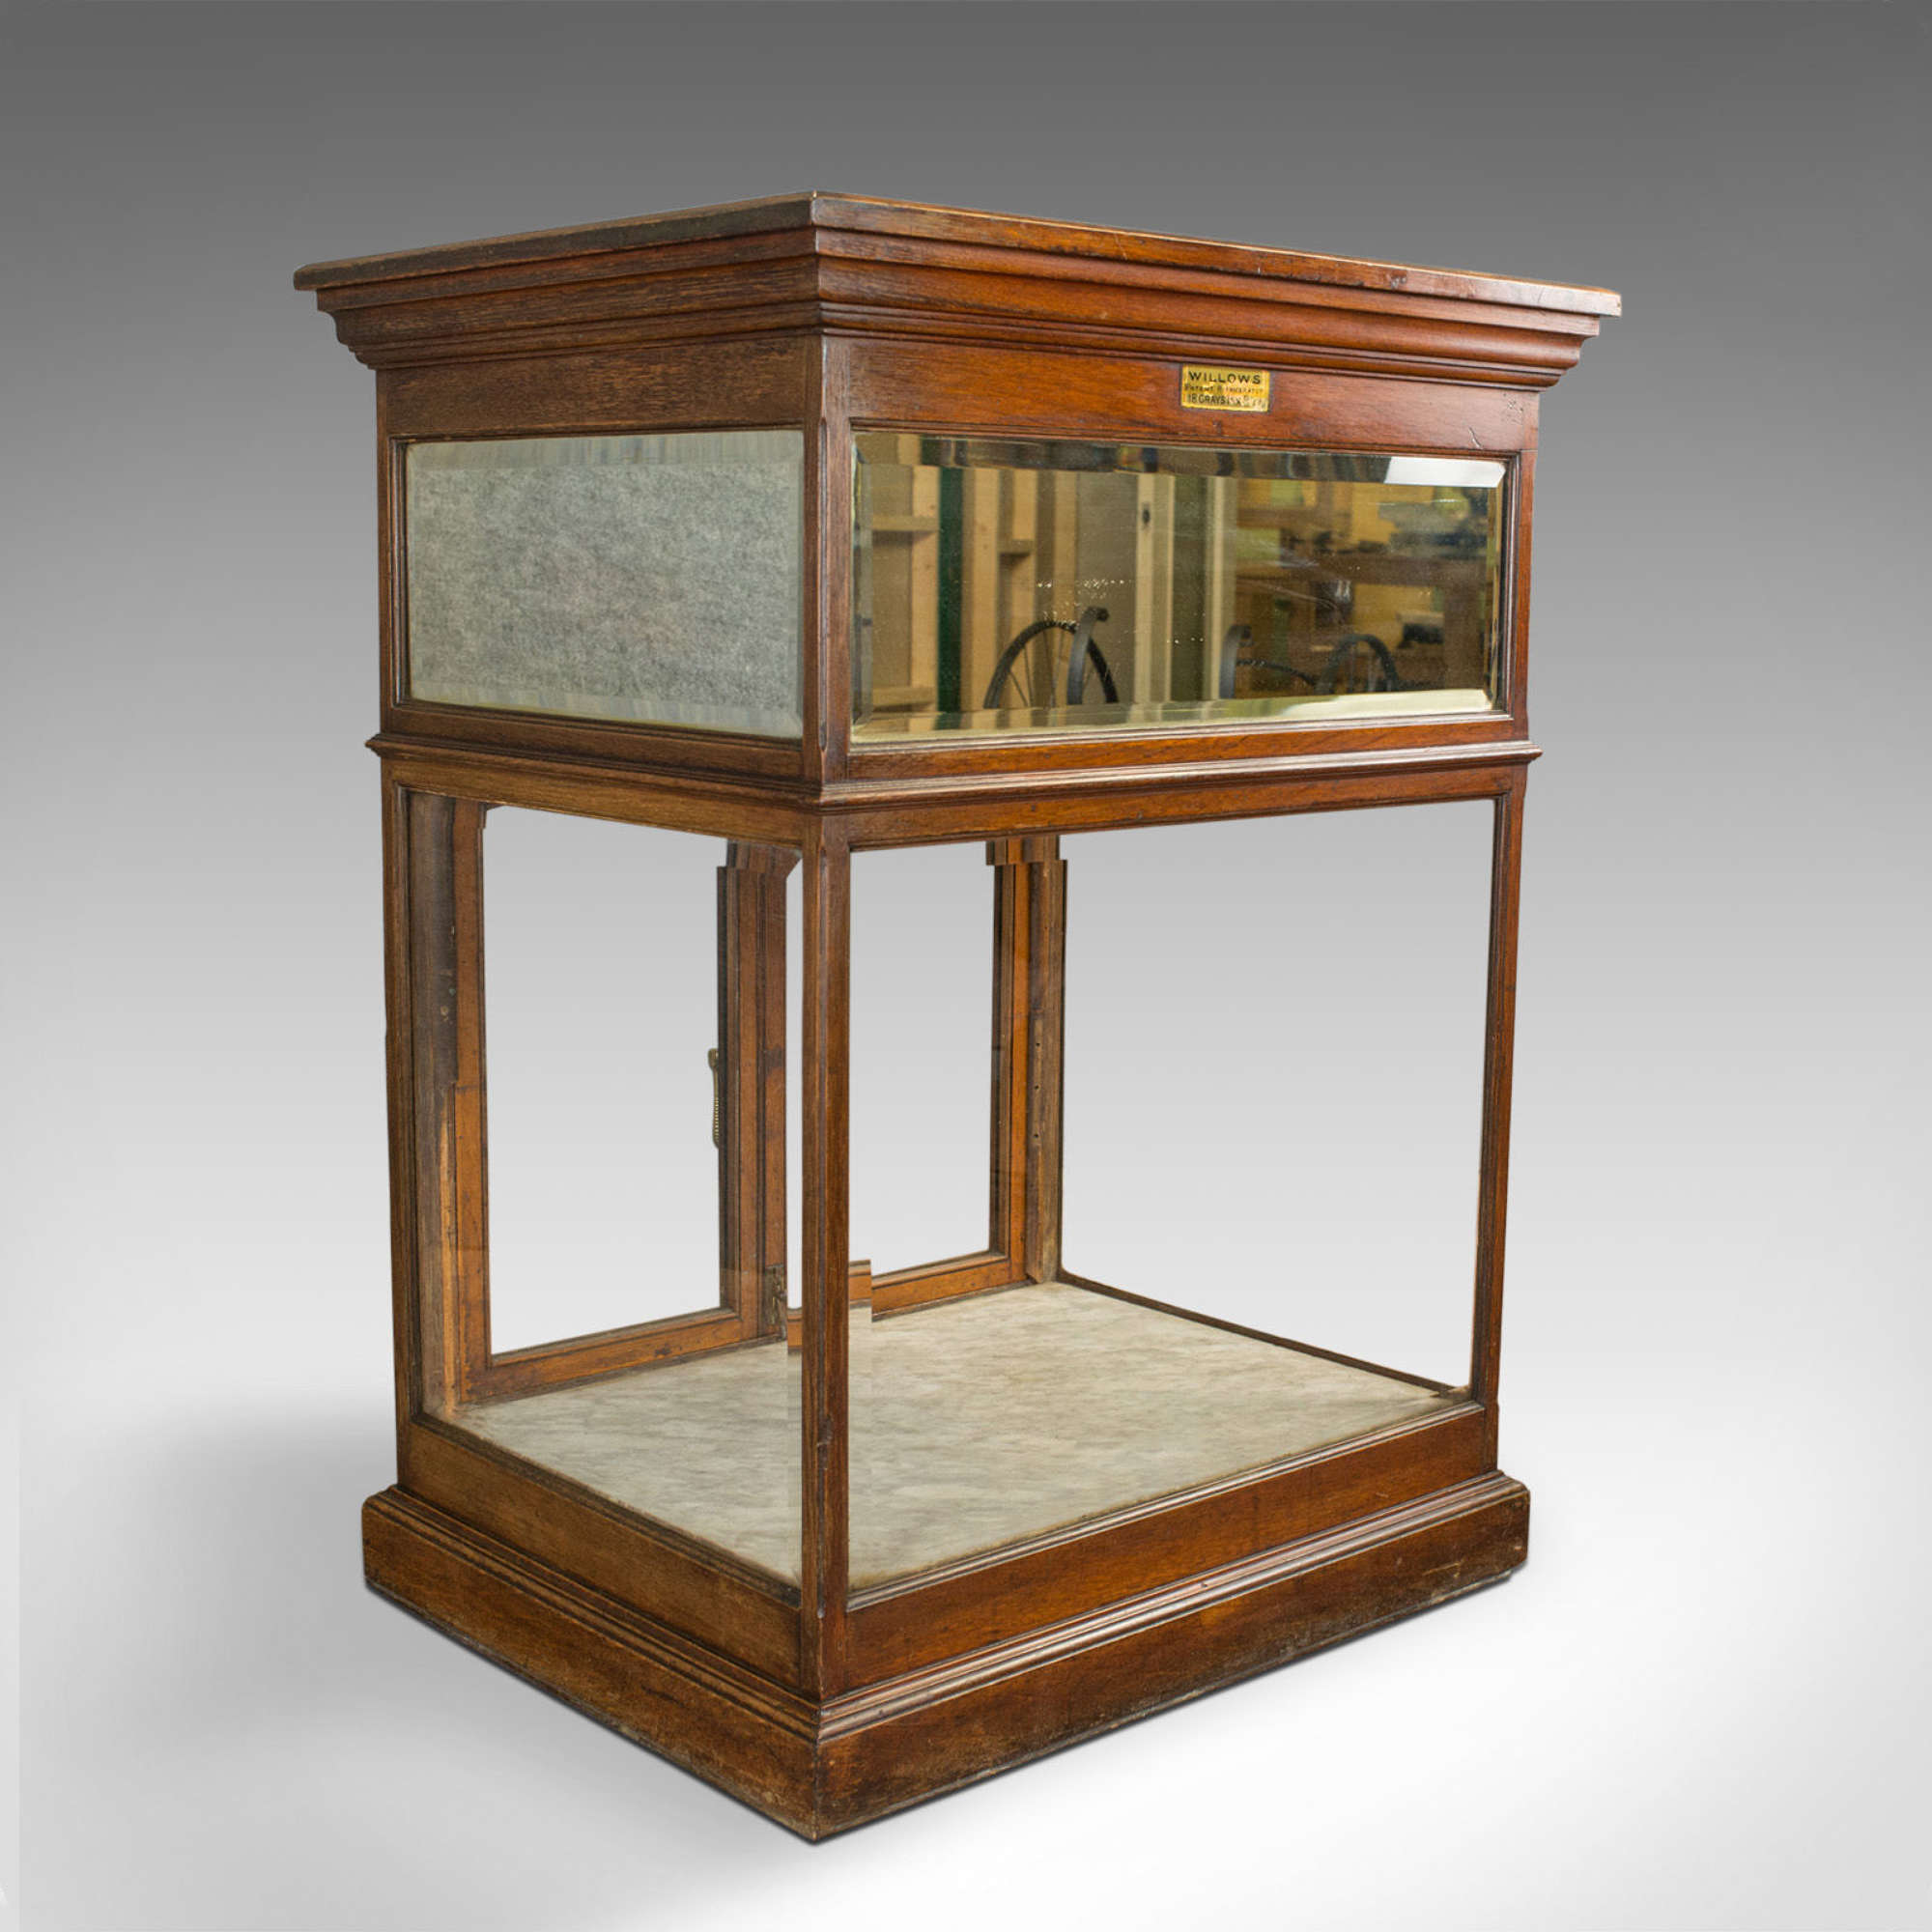 Antique Shop Display Cabinet, English, Edward Willows, Patented, Circa 1905